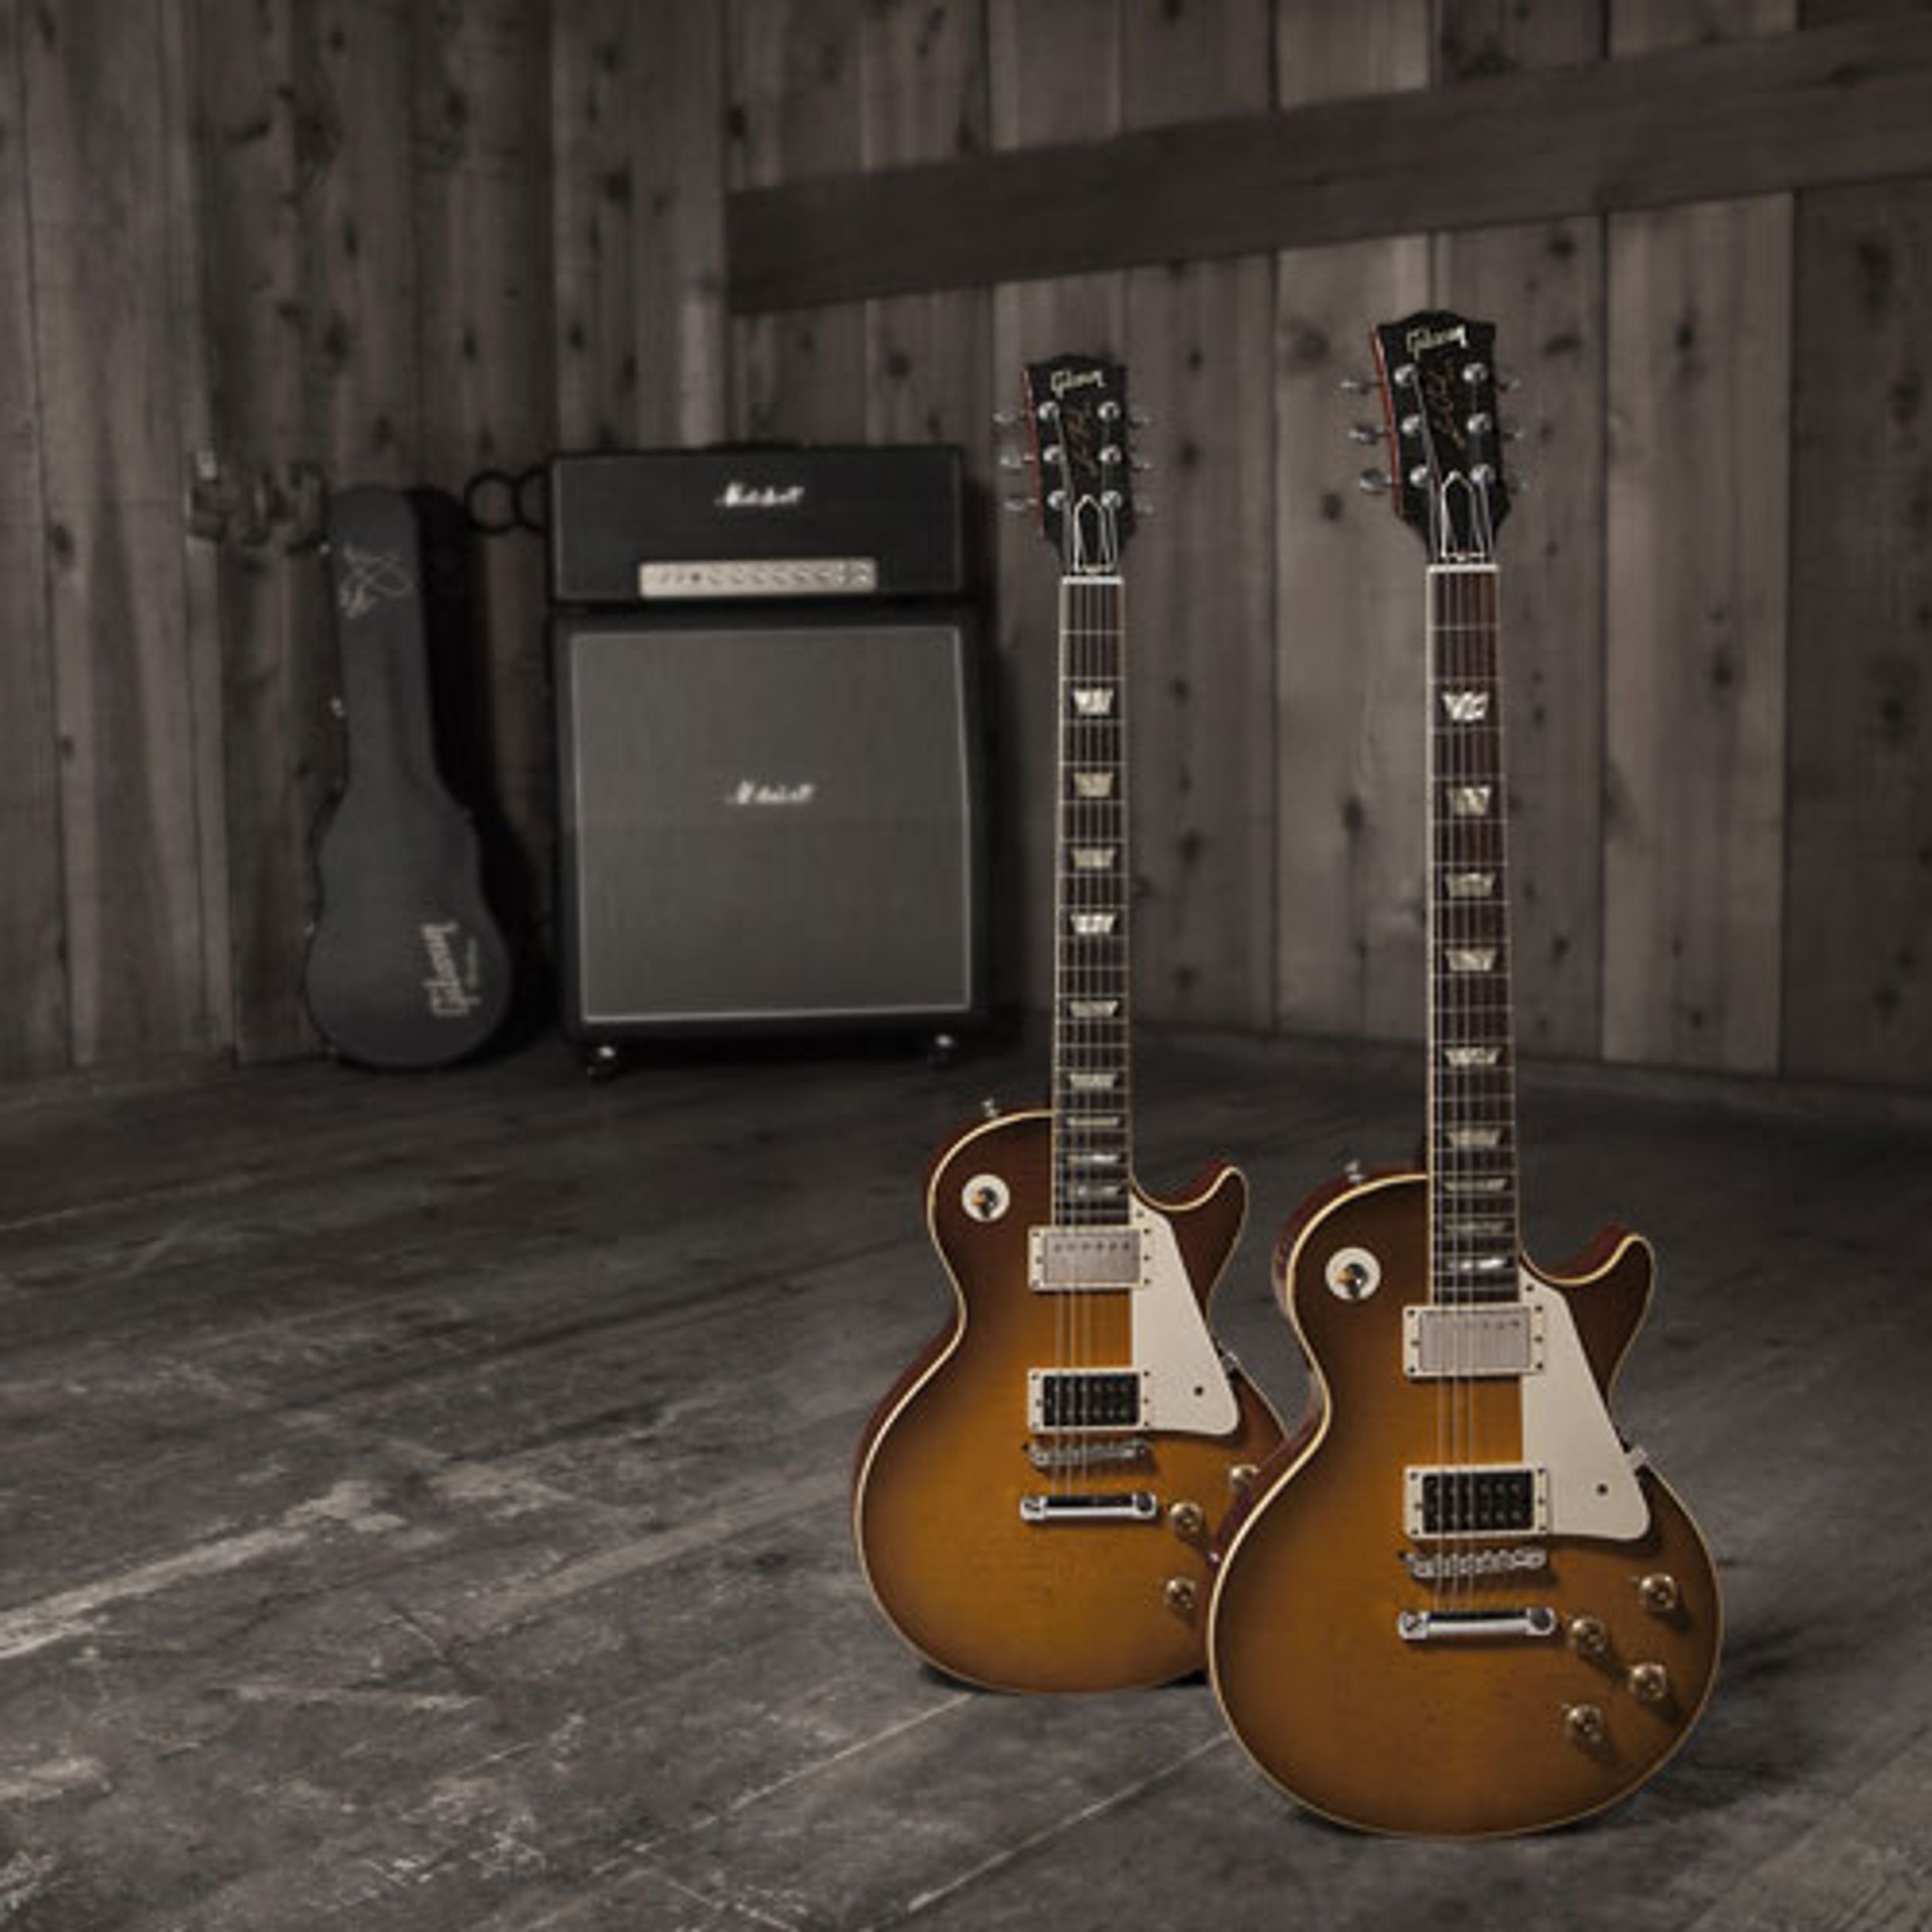 Guitar Center Announces Jimmy Page Les Paul Auction for Charity